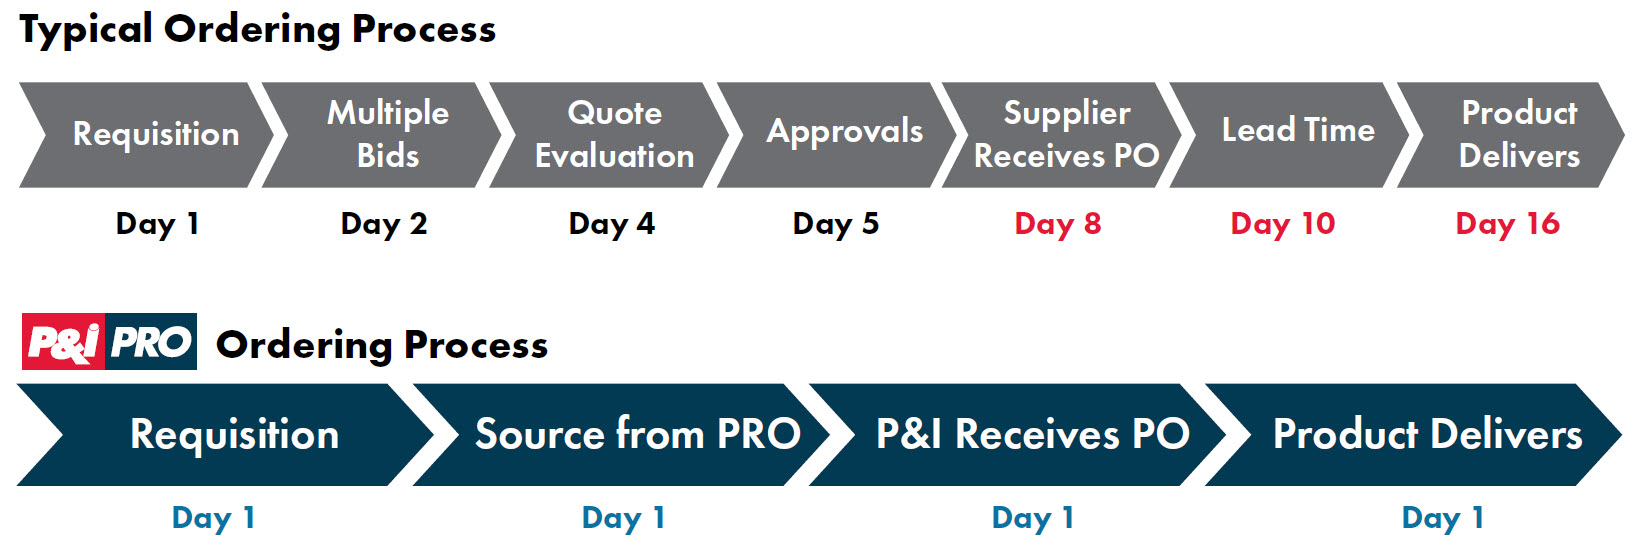 PRO Ordering Process Improvement